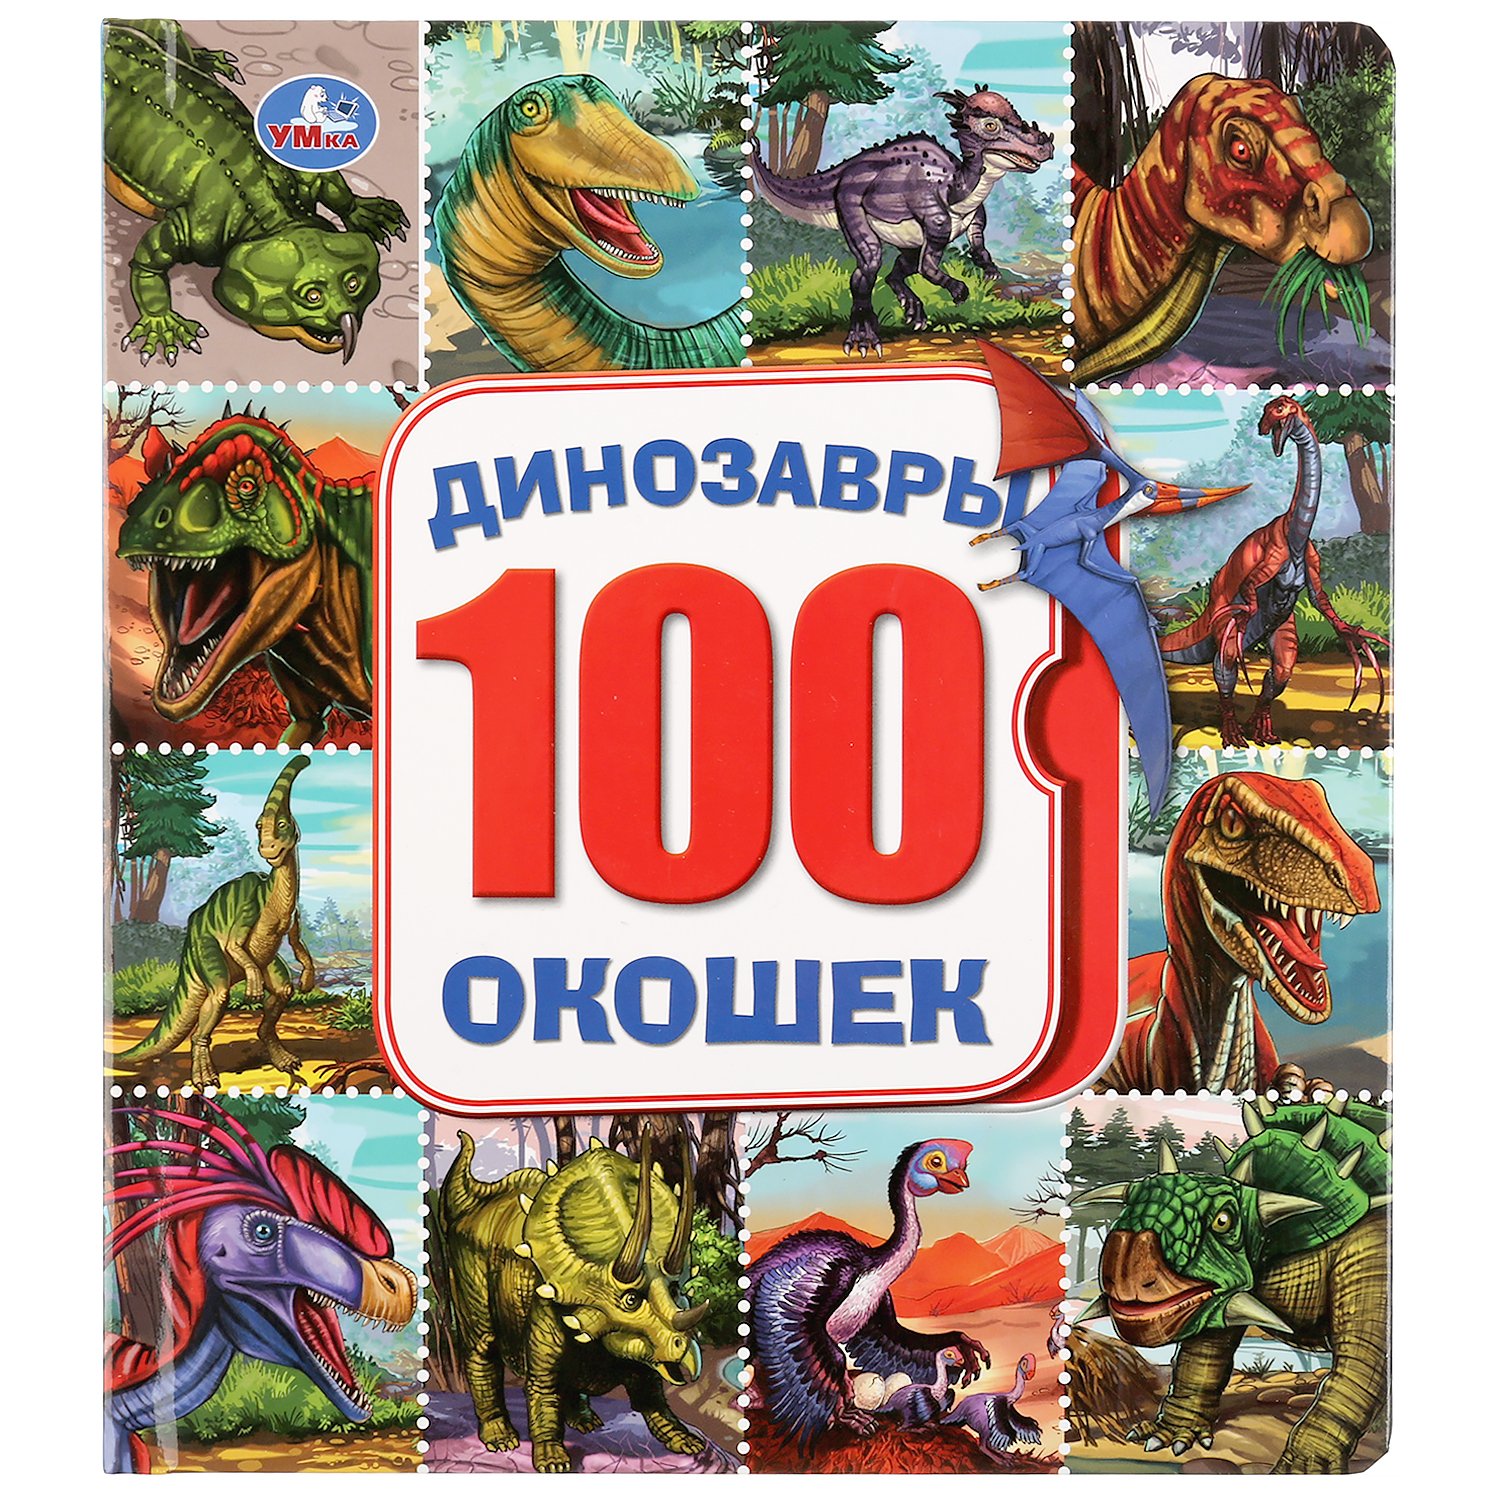 "Умка". Динозавры. Карт.книга со 100 окошками. Формат: 195х221мм. Объем: 14 карт. стр. в кор.32шт